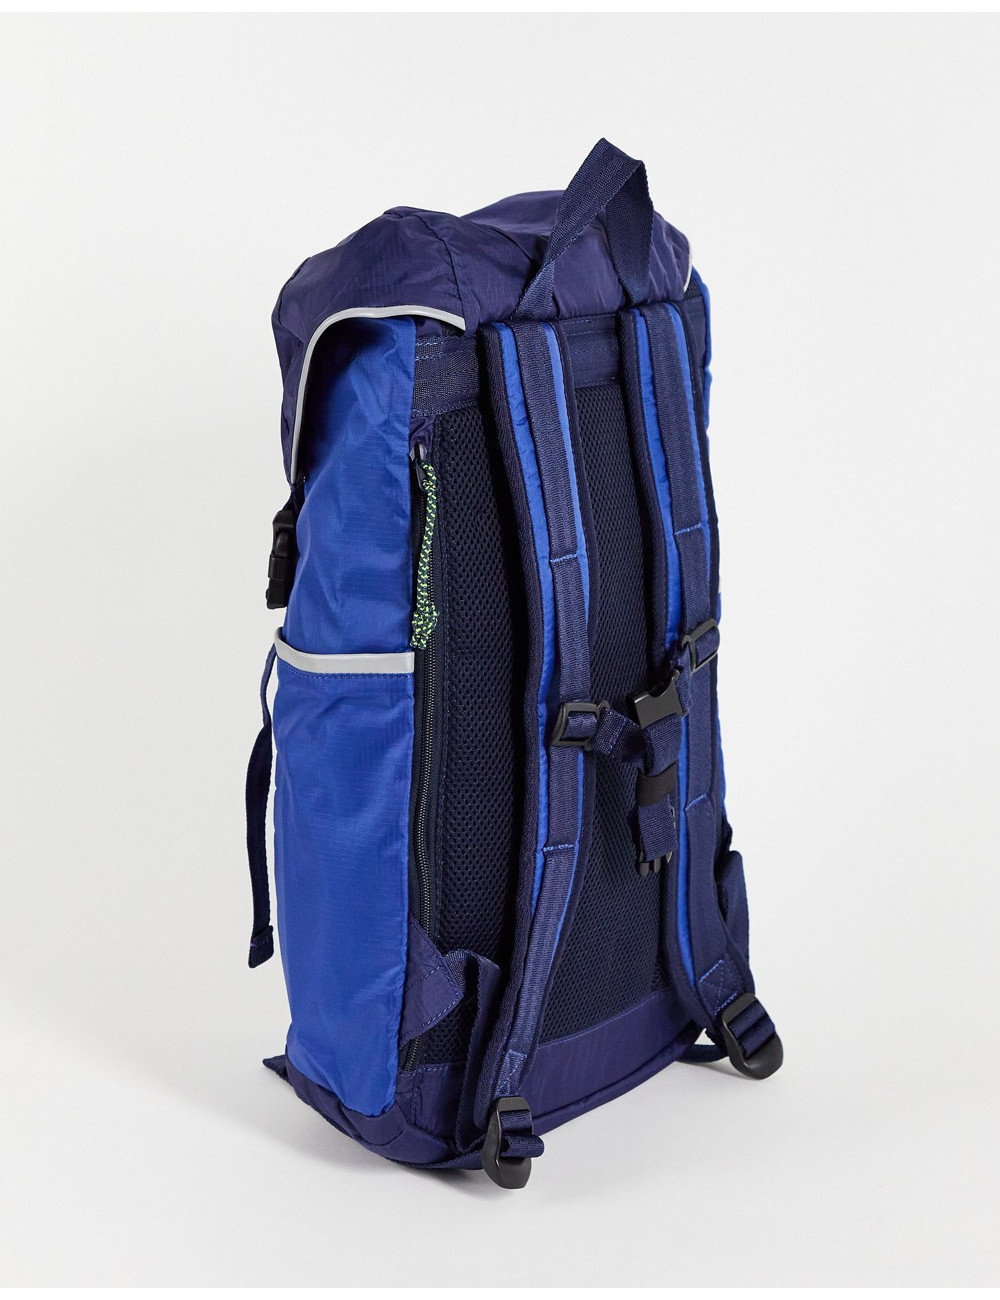 Superdry top load backpack